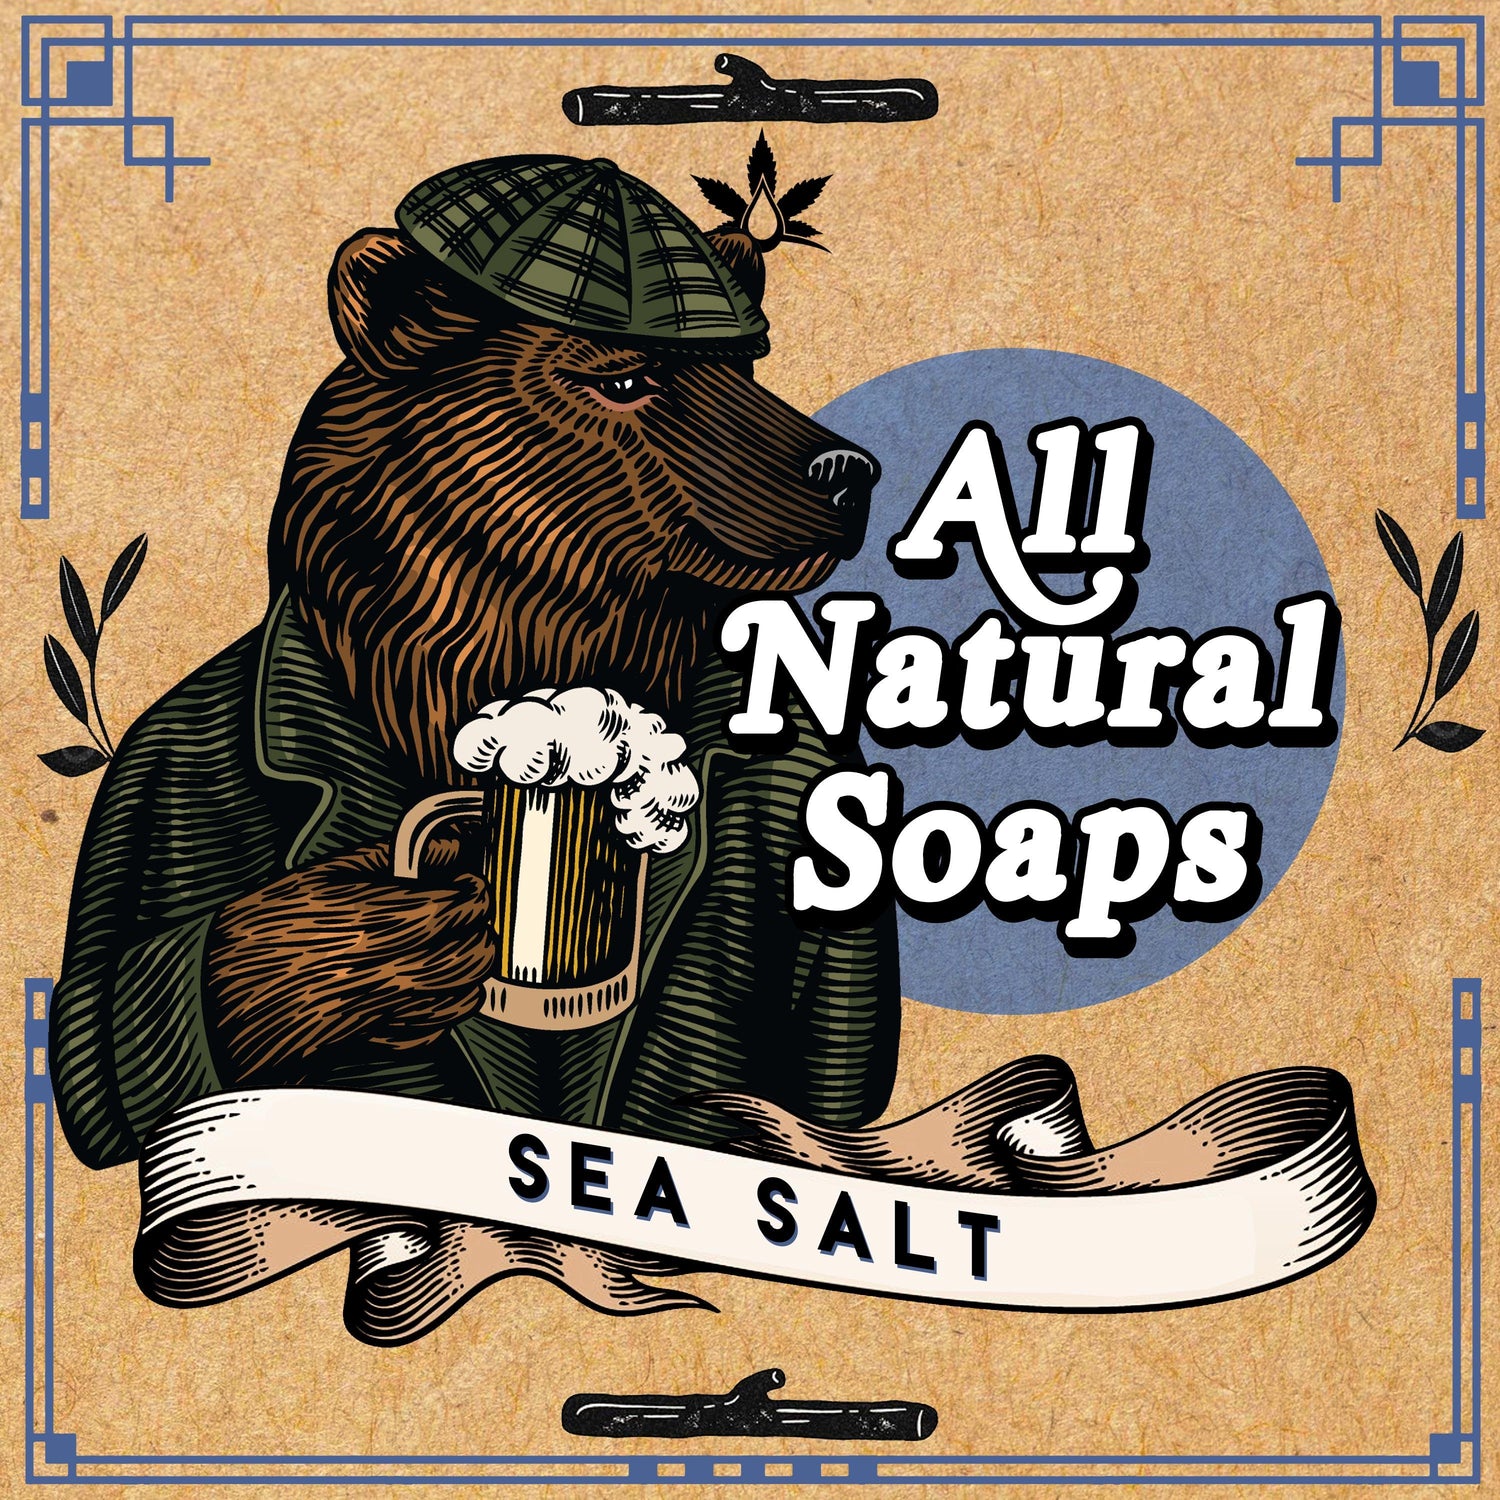 Natural Soap - Sea Salt - All Natural Soaps